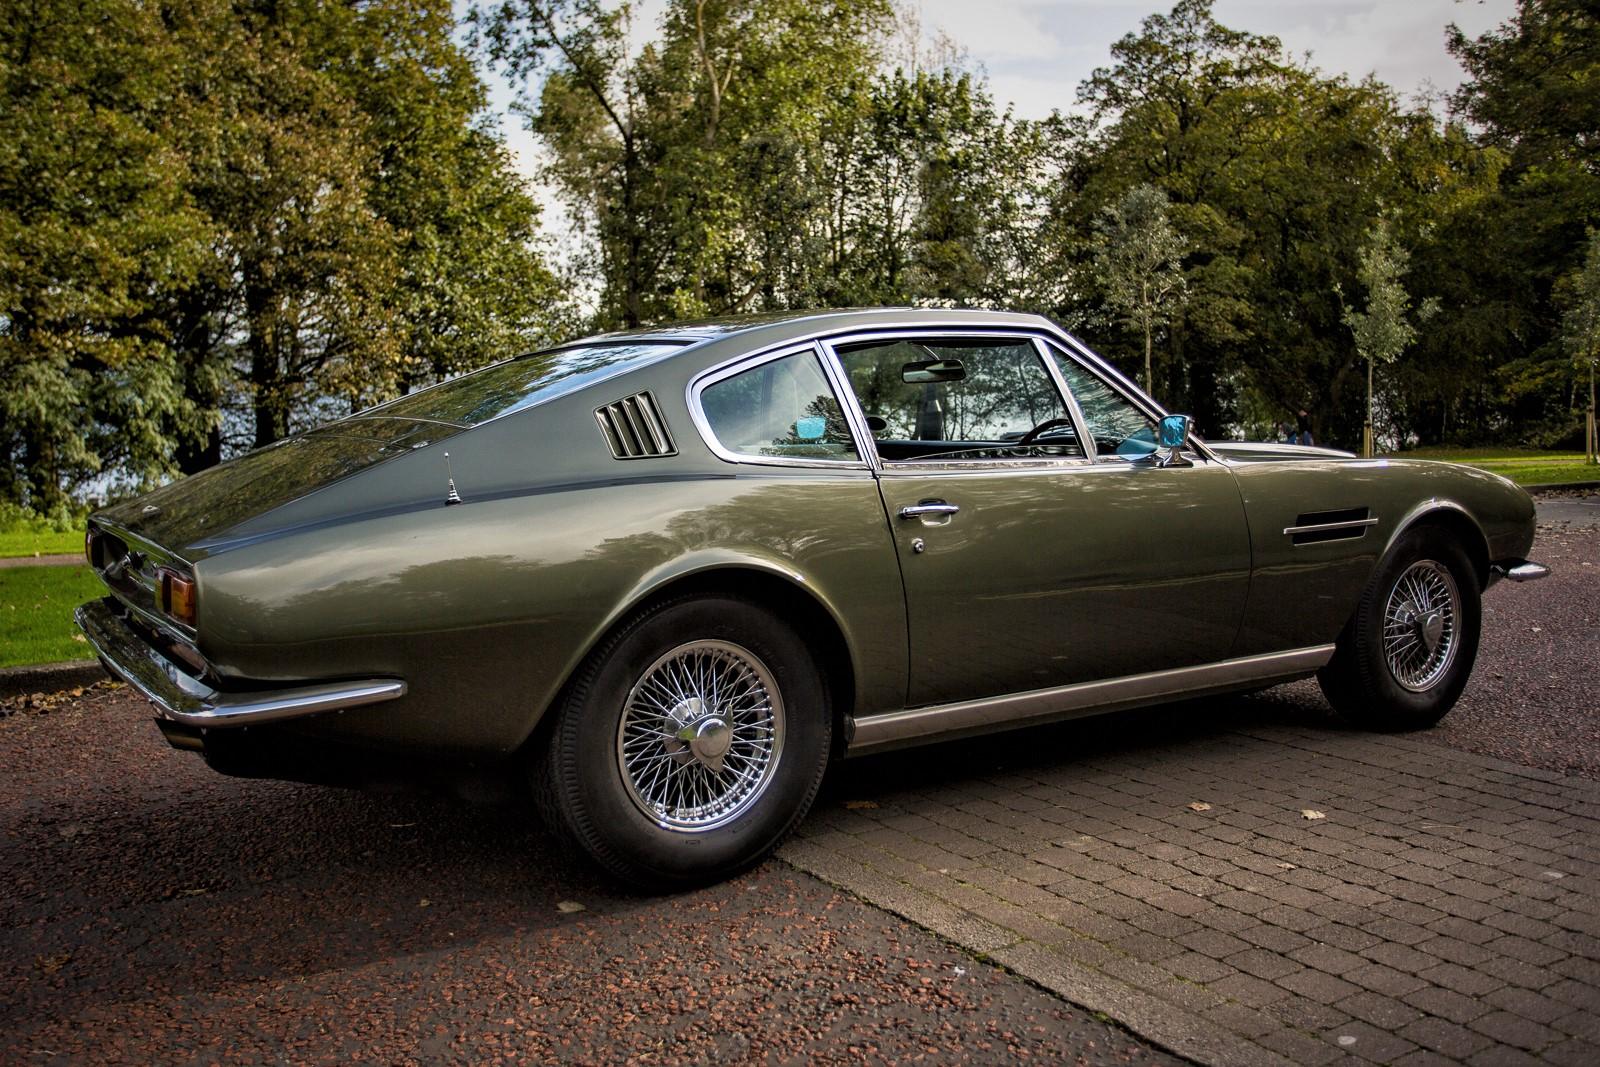 1968 Aston Martin DBS